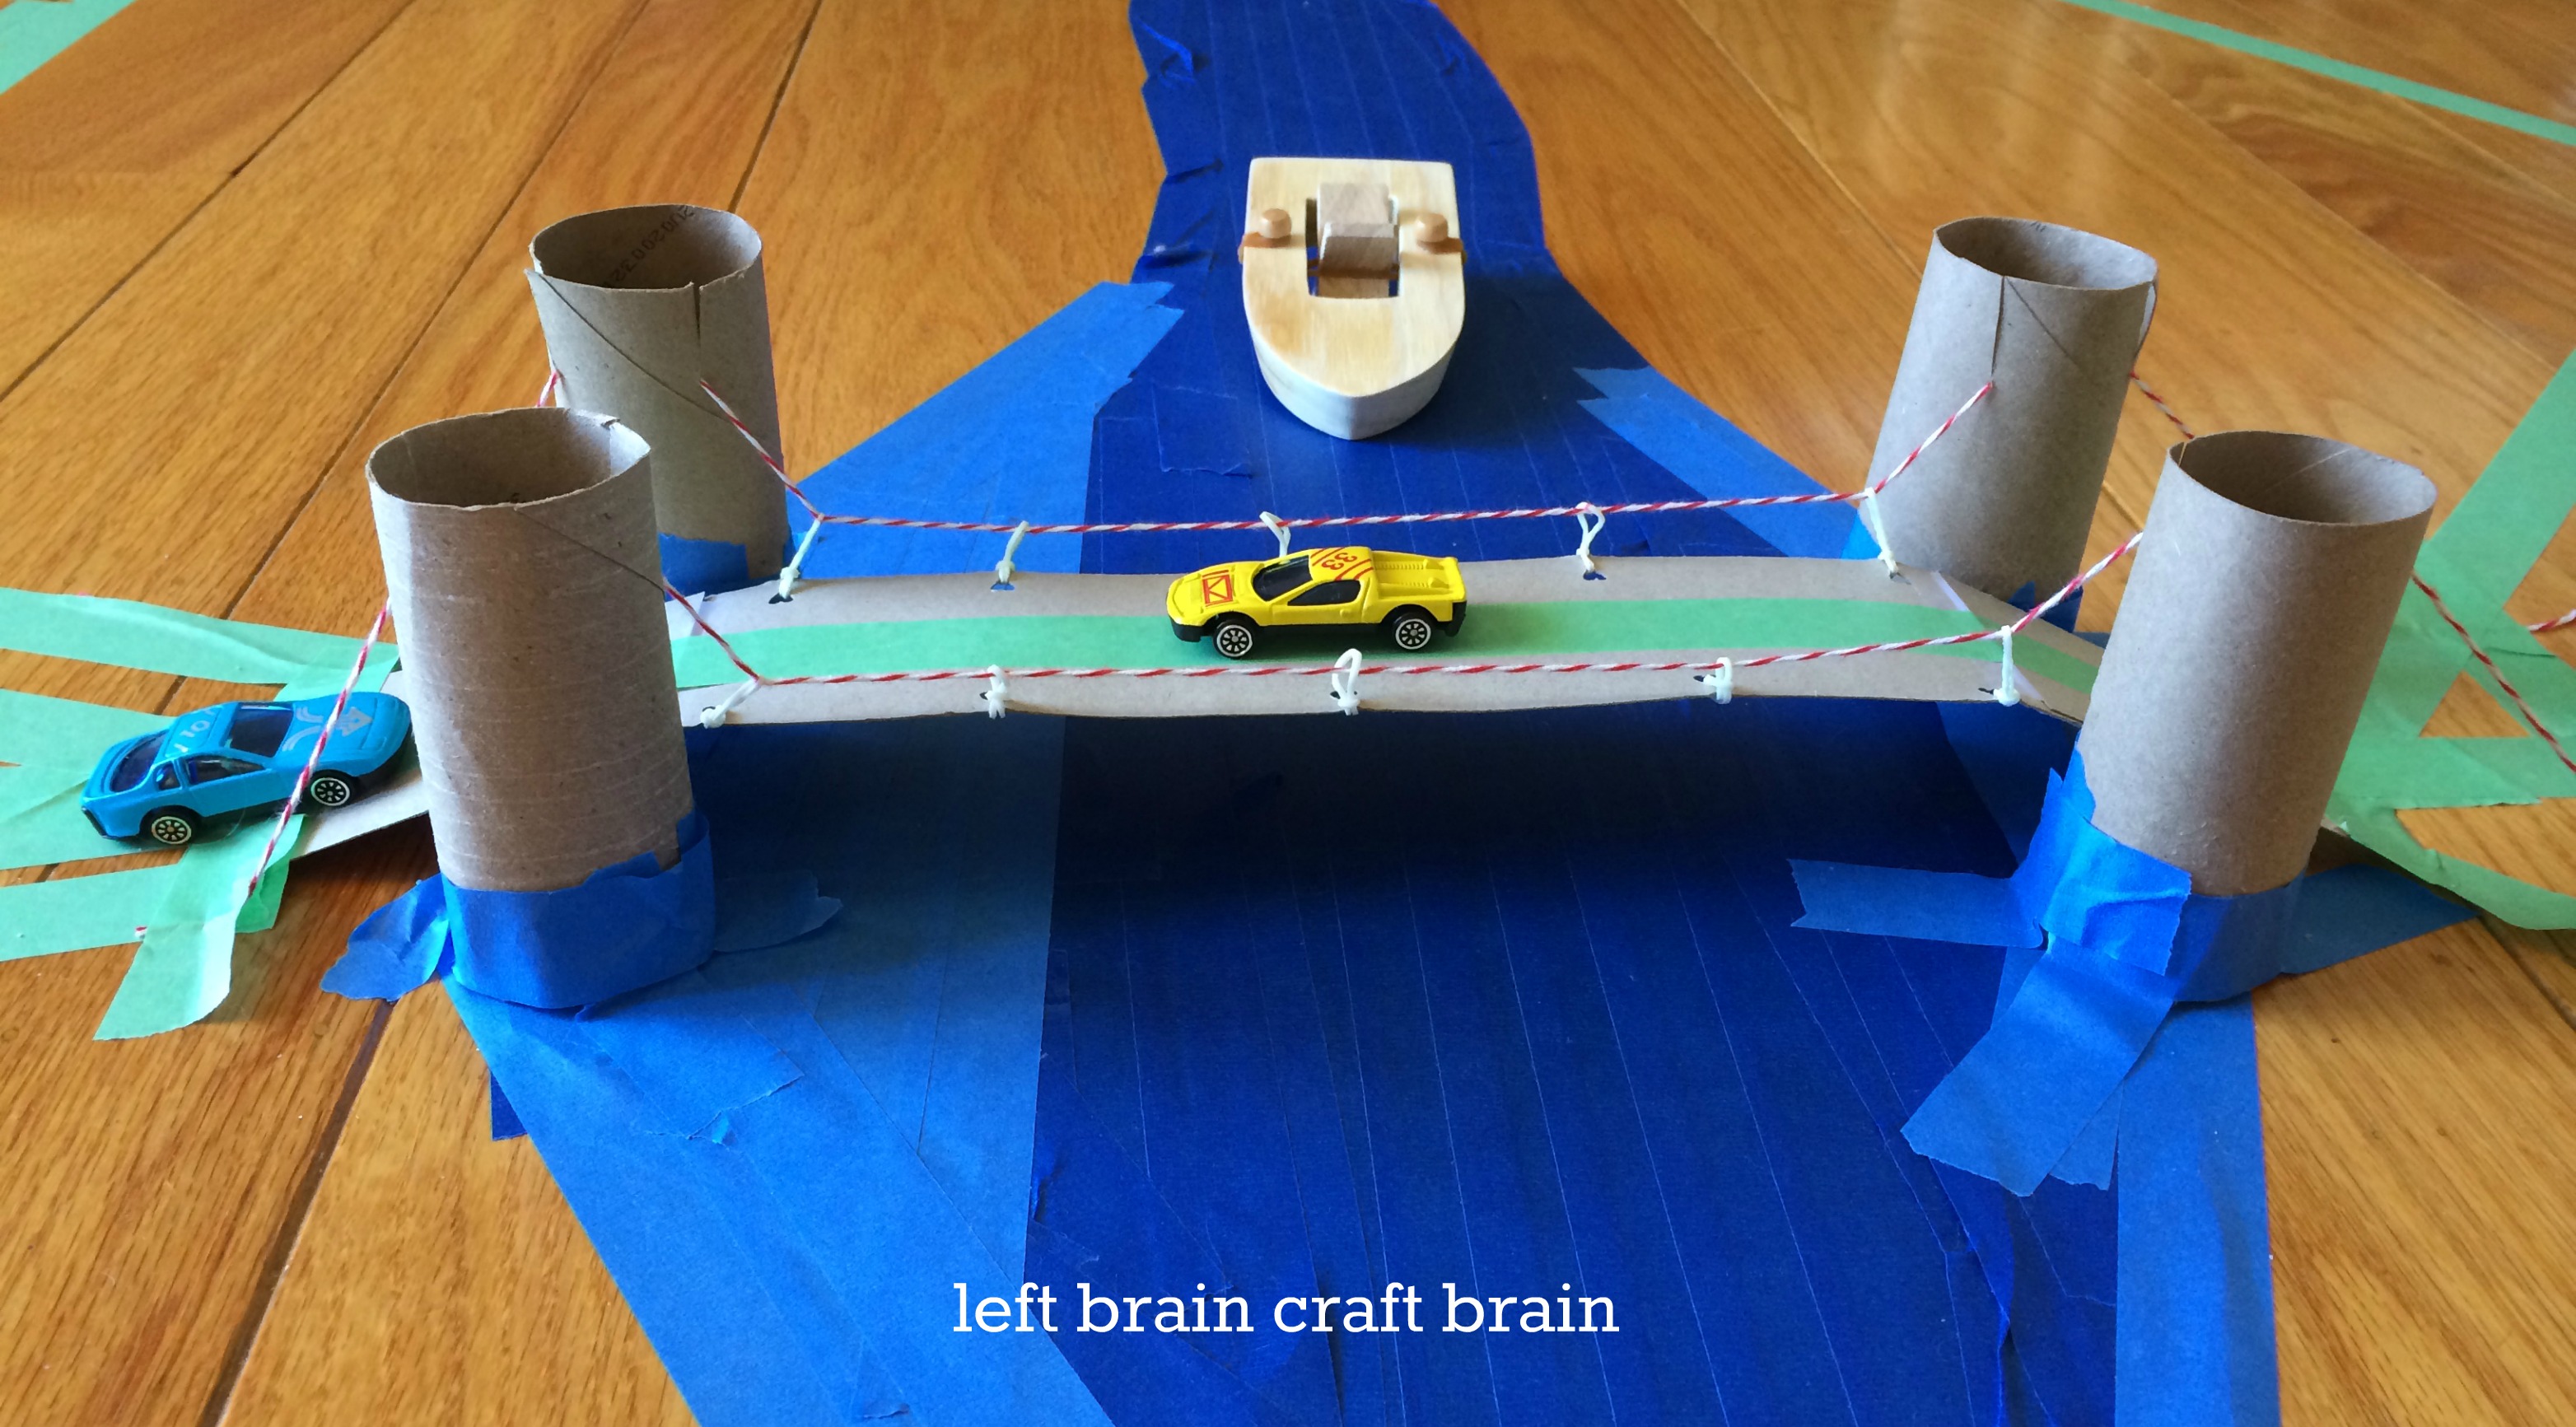 diy-recycled-suspension-bridge-craft-closeup-left-brain-craft-brain1.jpg